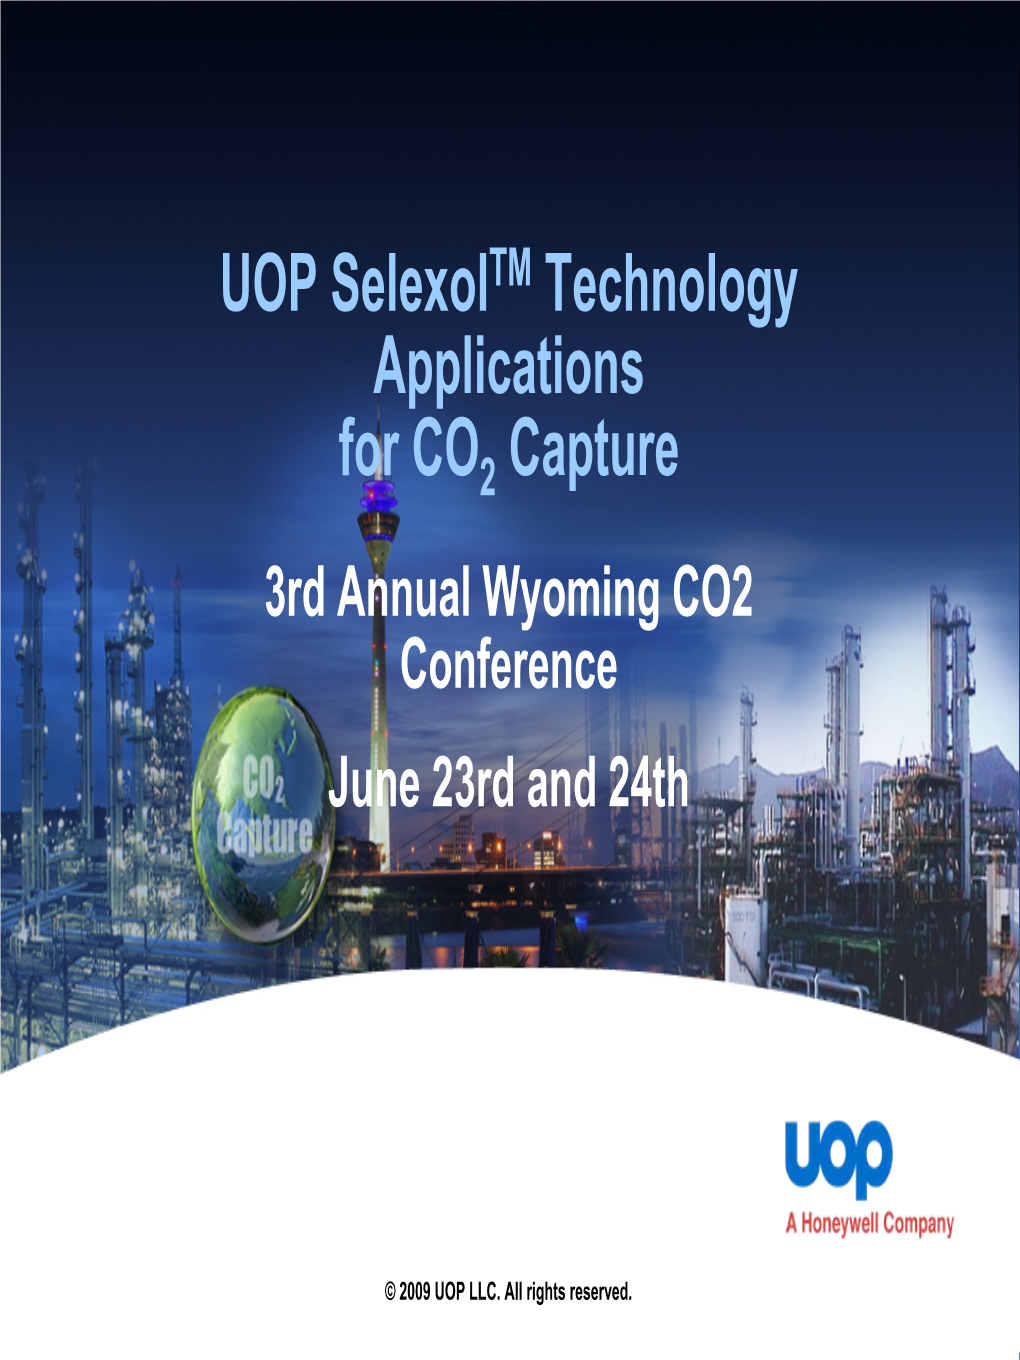 UOP Selexoltm Technology Applications for CO Capture